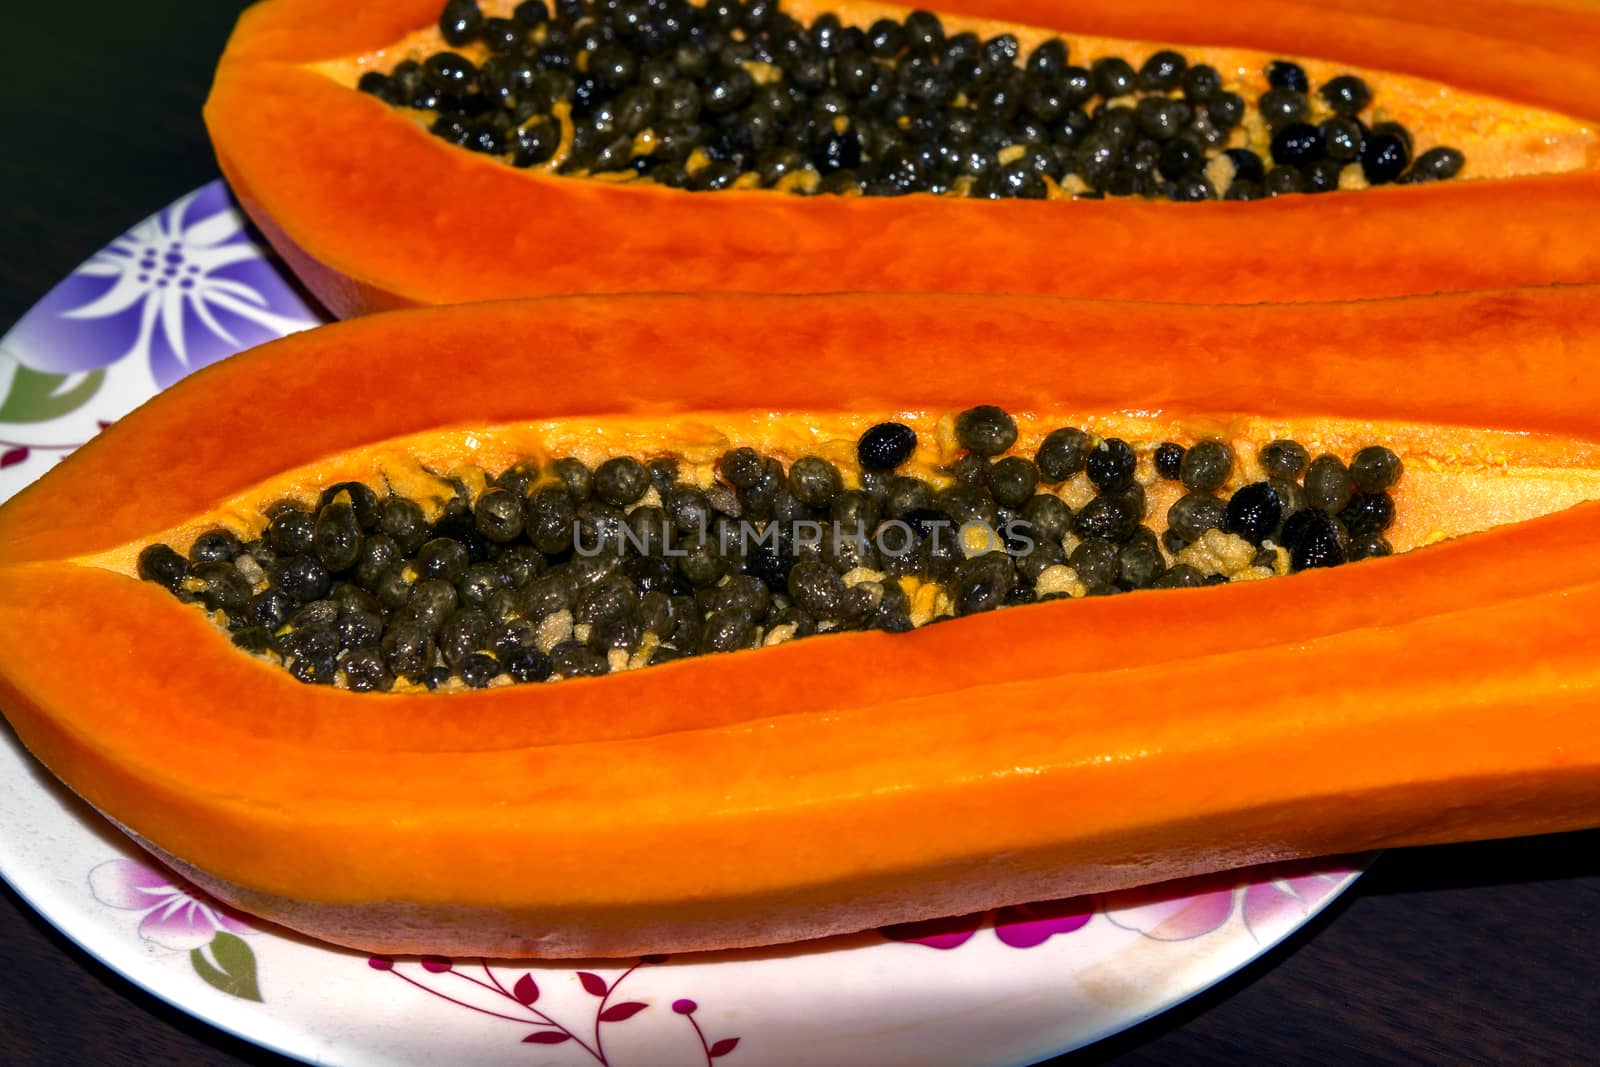 Ripe Papaya Seeds in cut of the fruit